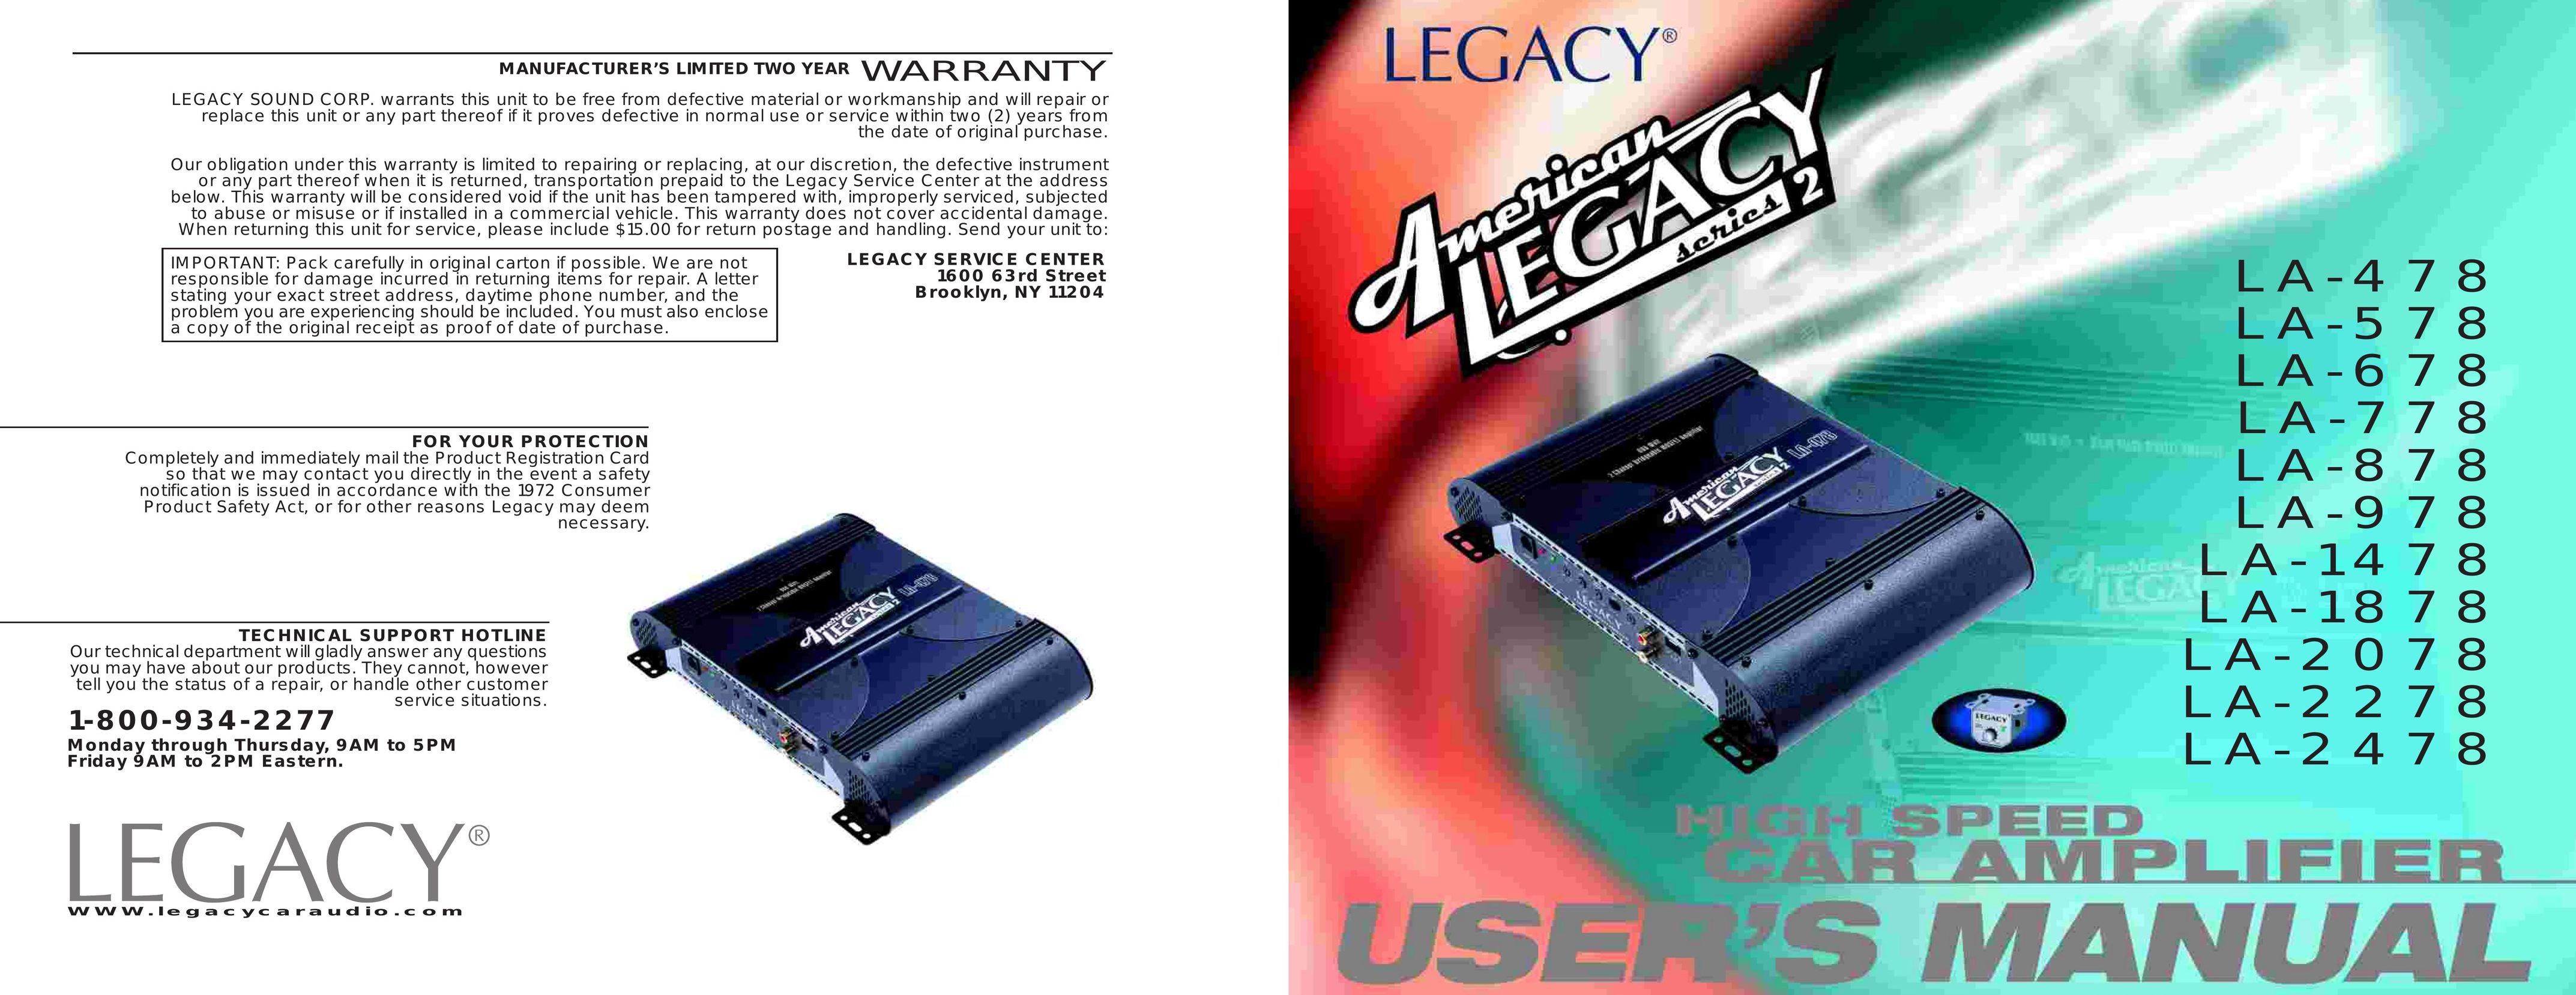 Legacy Car Audio LA-2478 Car Amplifier User Manual